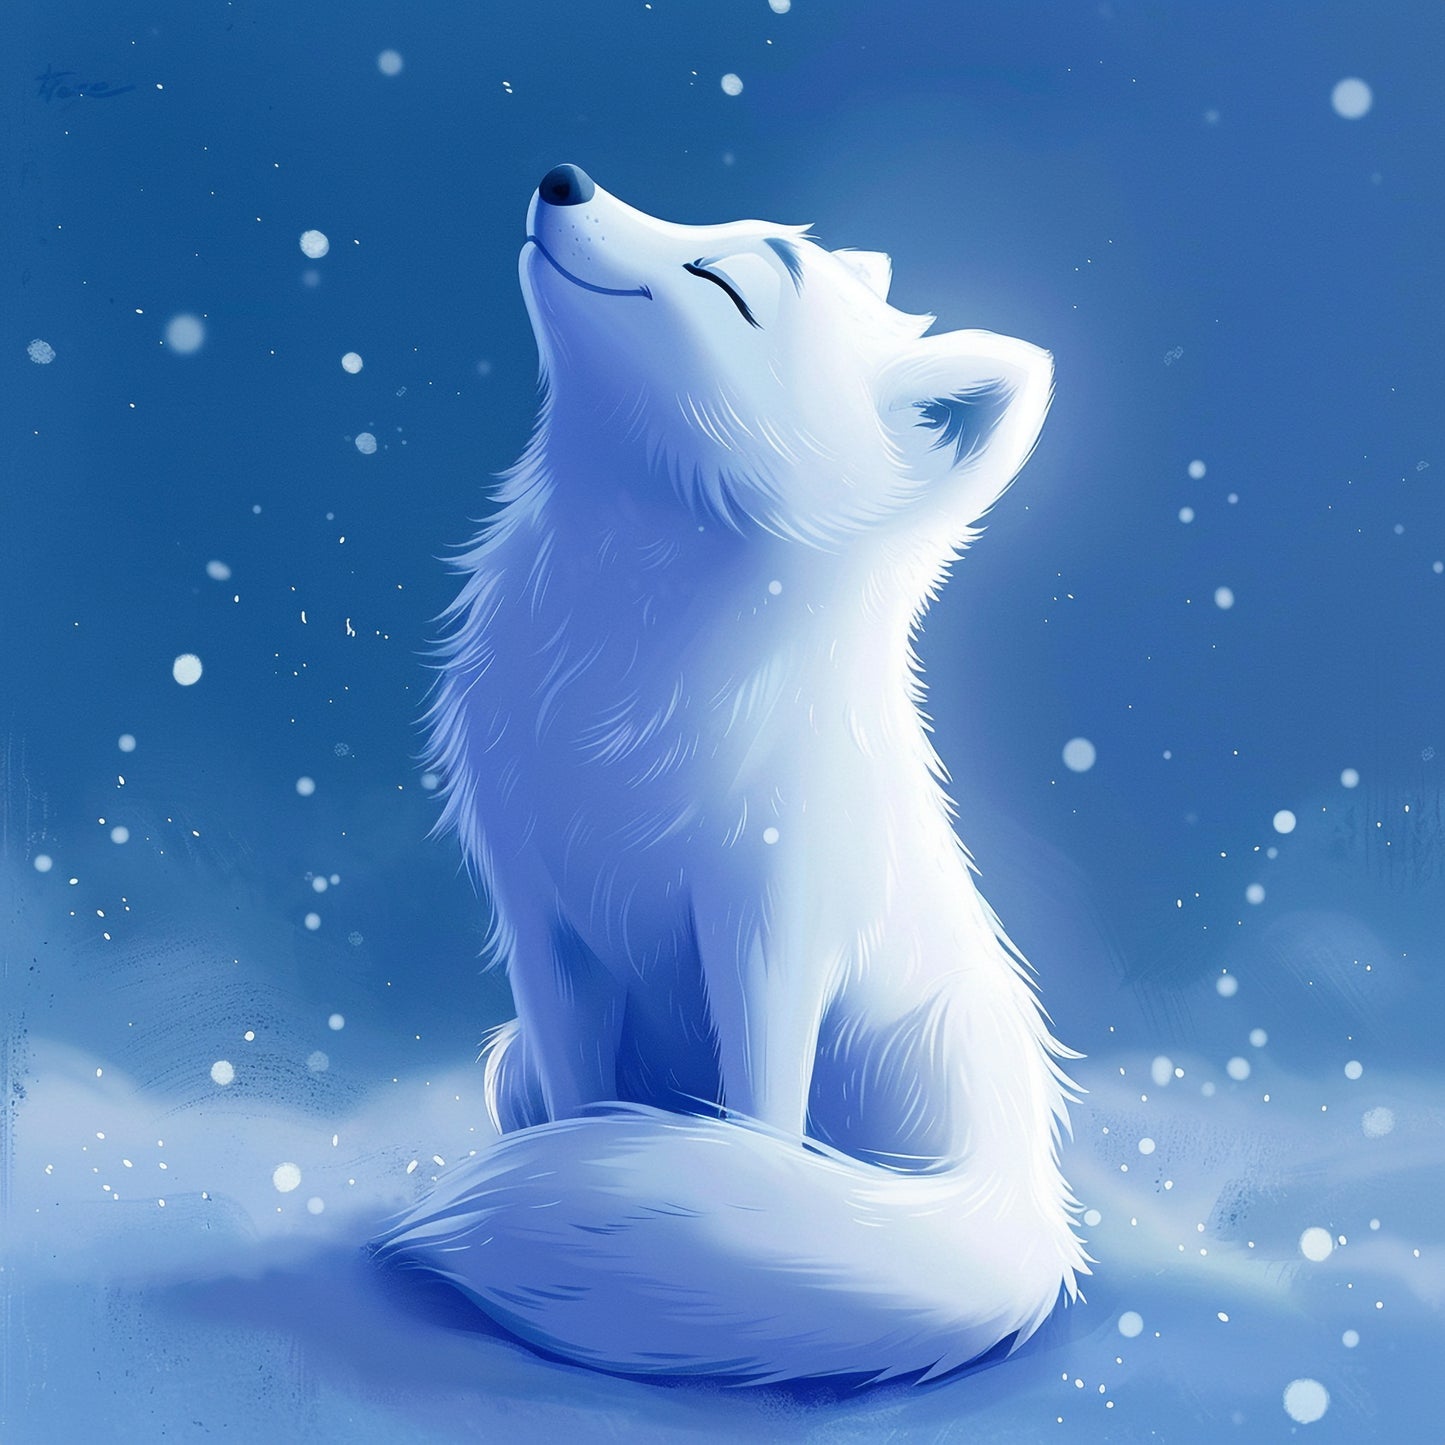 Dreamy Polar Fox Illustration in a Magical Snowfall